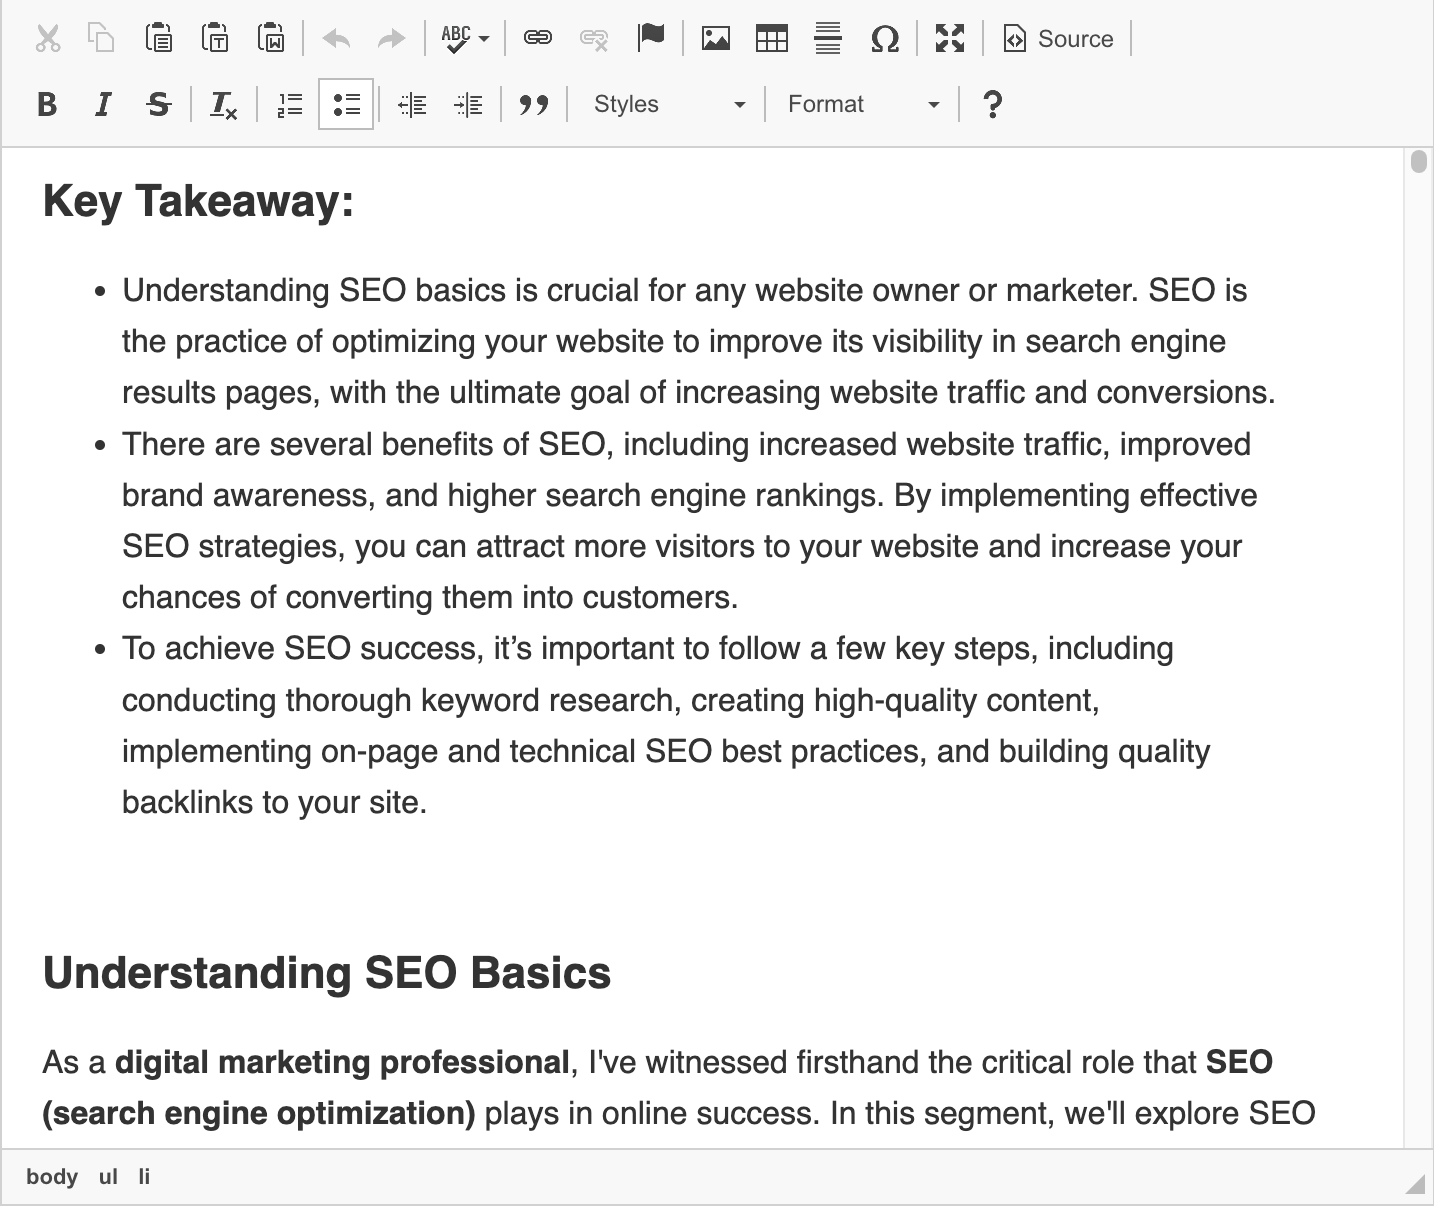 Autoblogging output for "SEO basics" topic using "Godlike mode"
